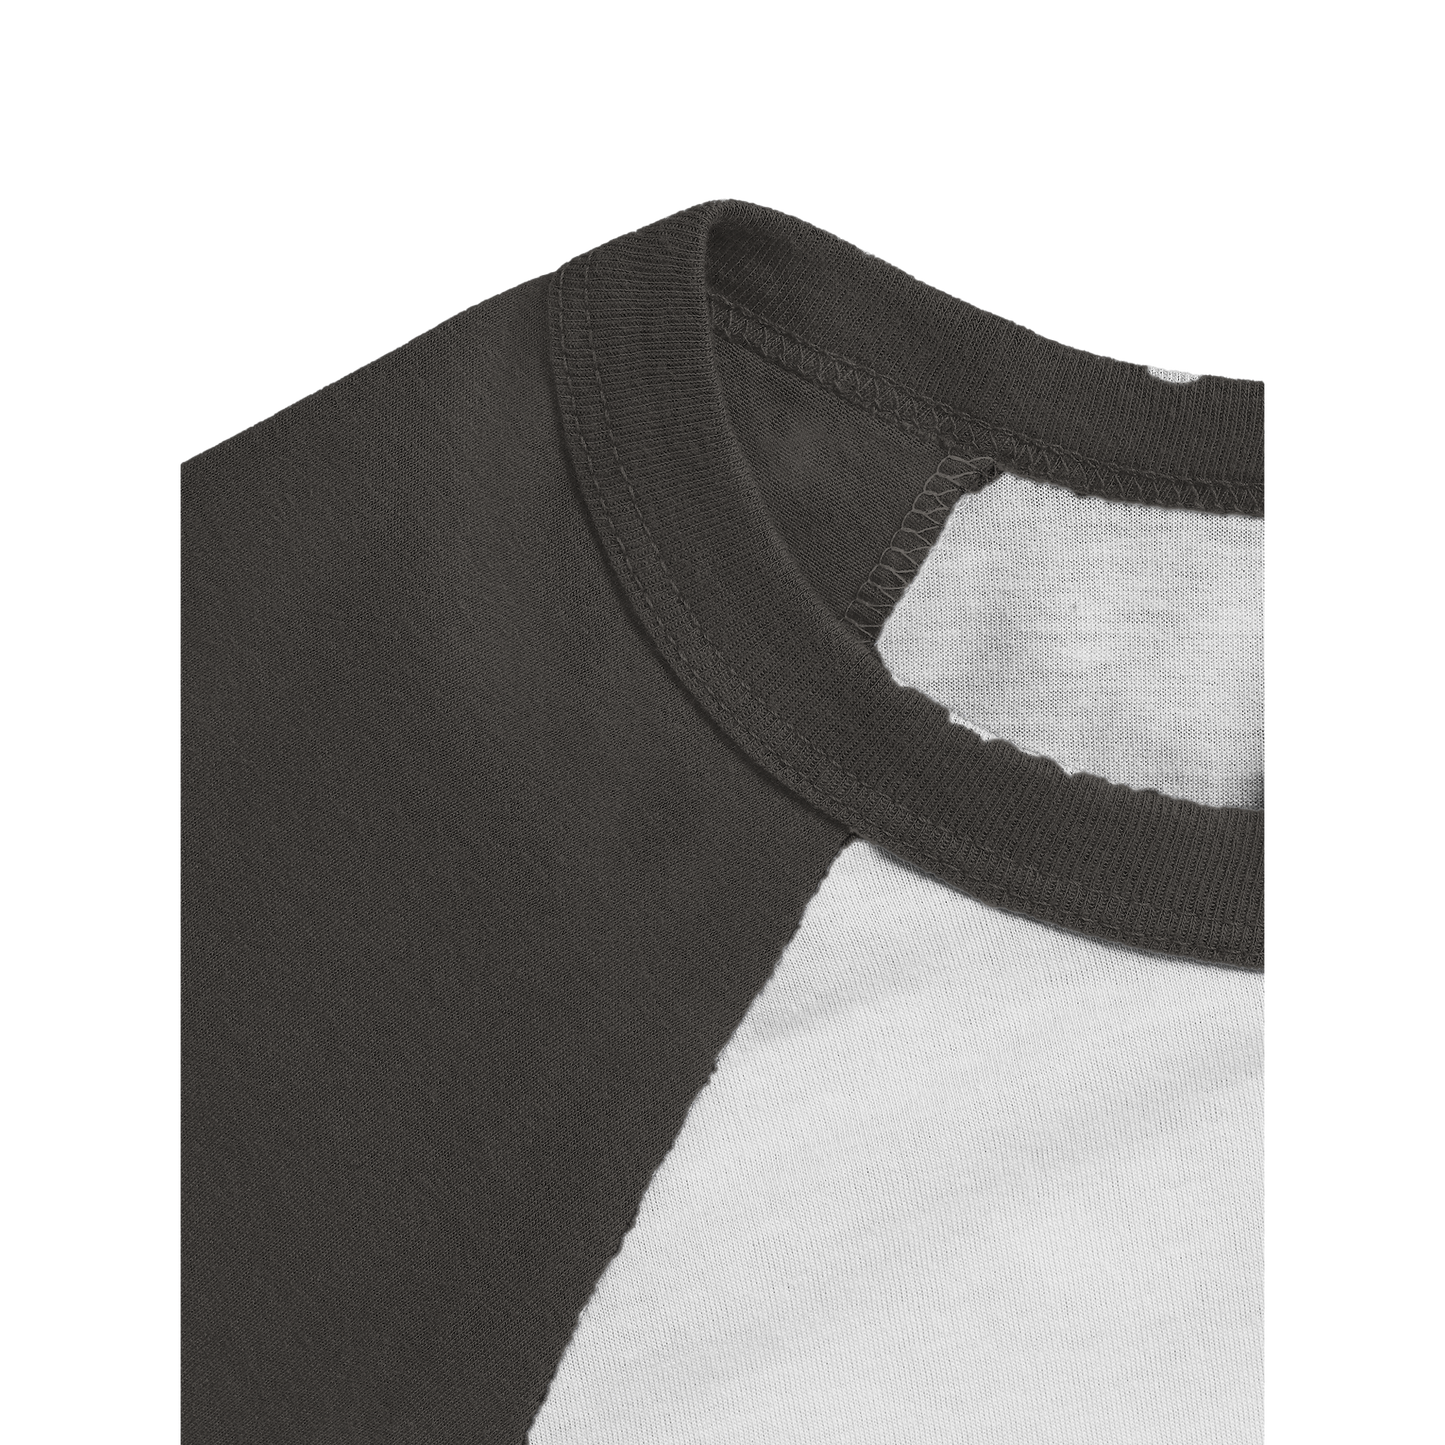 Best friend Unisex 3/4 sleeve Raglan T-shirt